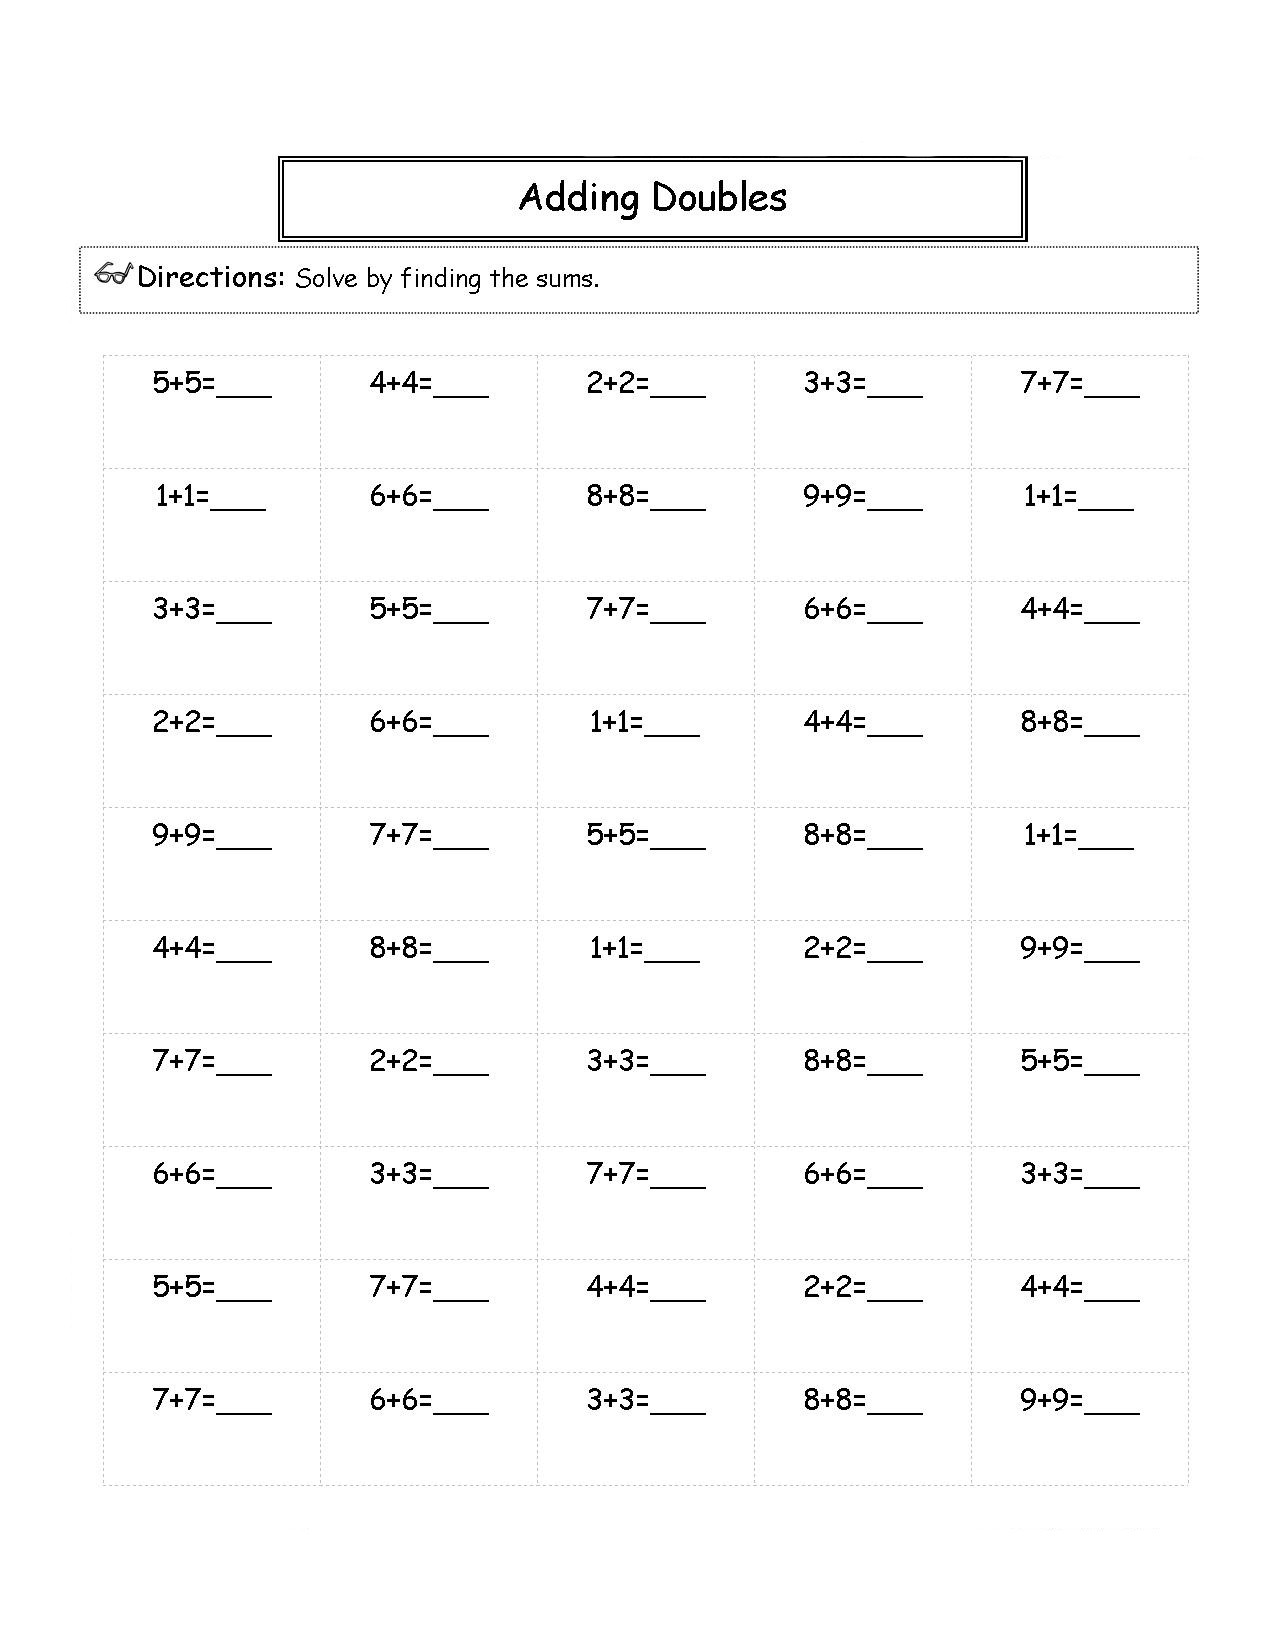 Adding Doubles Worksheet 2nd Grade 2nd Grade Math Worksheets Best Coloring Pages for Kids